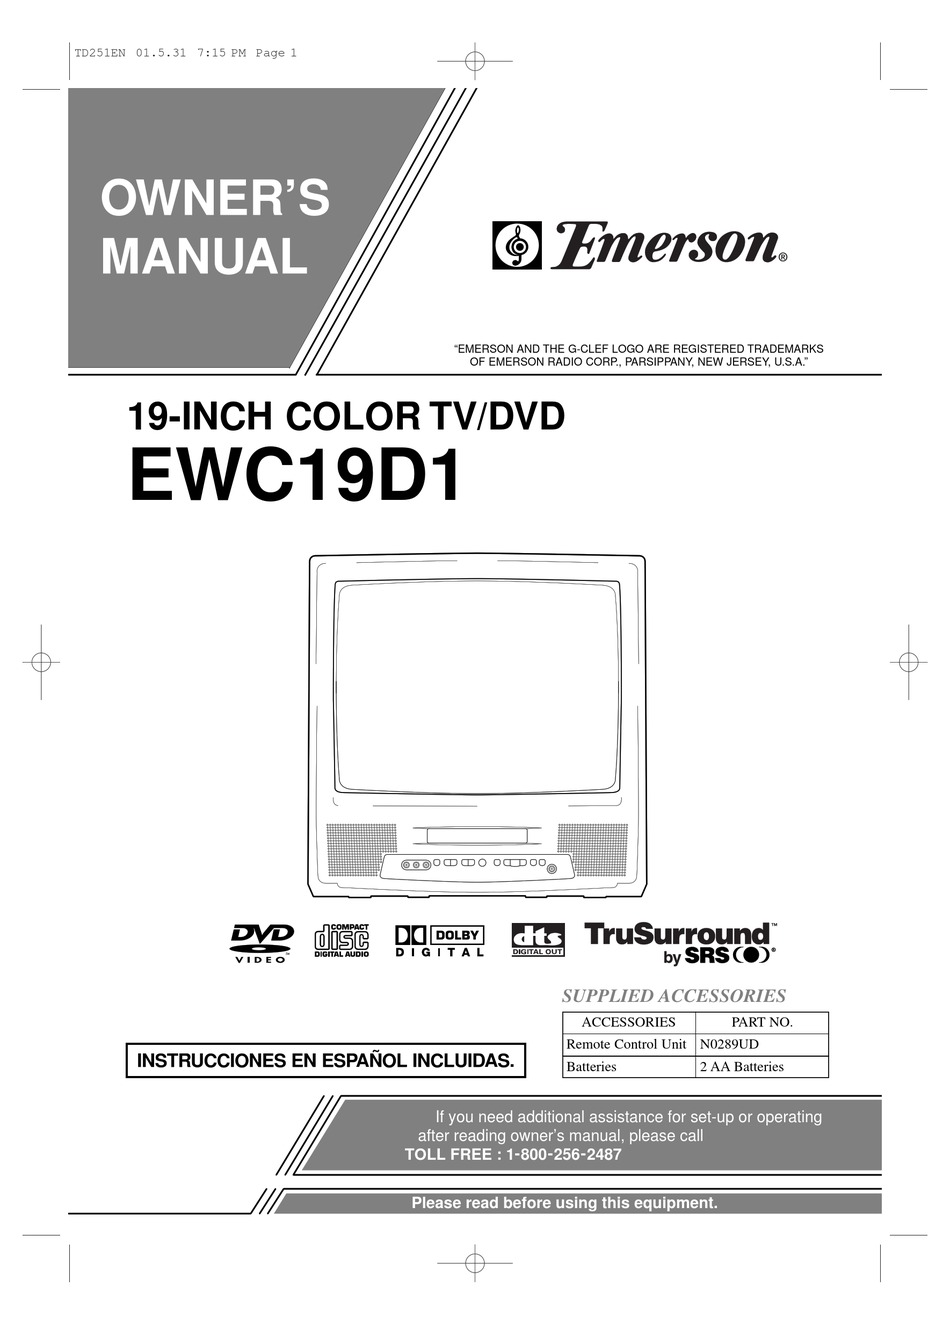 EMERSON EWC19D1 OWNER'S MANUAL Pdf Download | ManualsLib